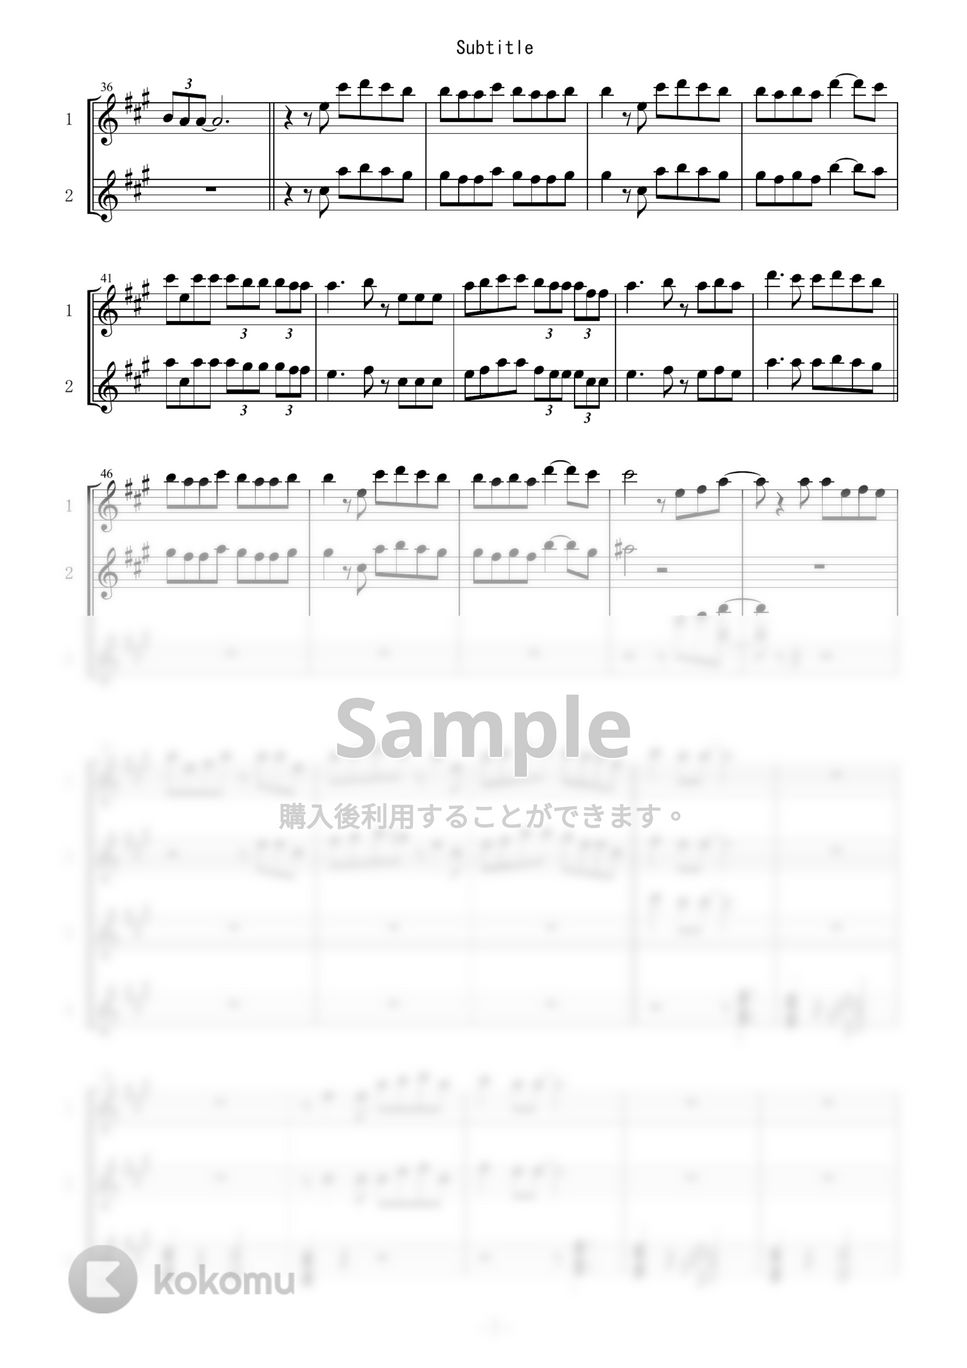 Official髭男dism - Subtitle (in C / ＋3 /ハモリ有り/フルート/オーボエ/ silent / 女性キー) by enorisa